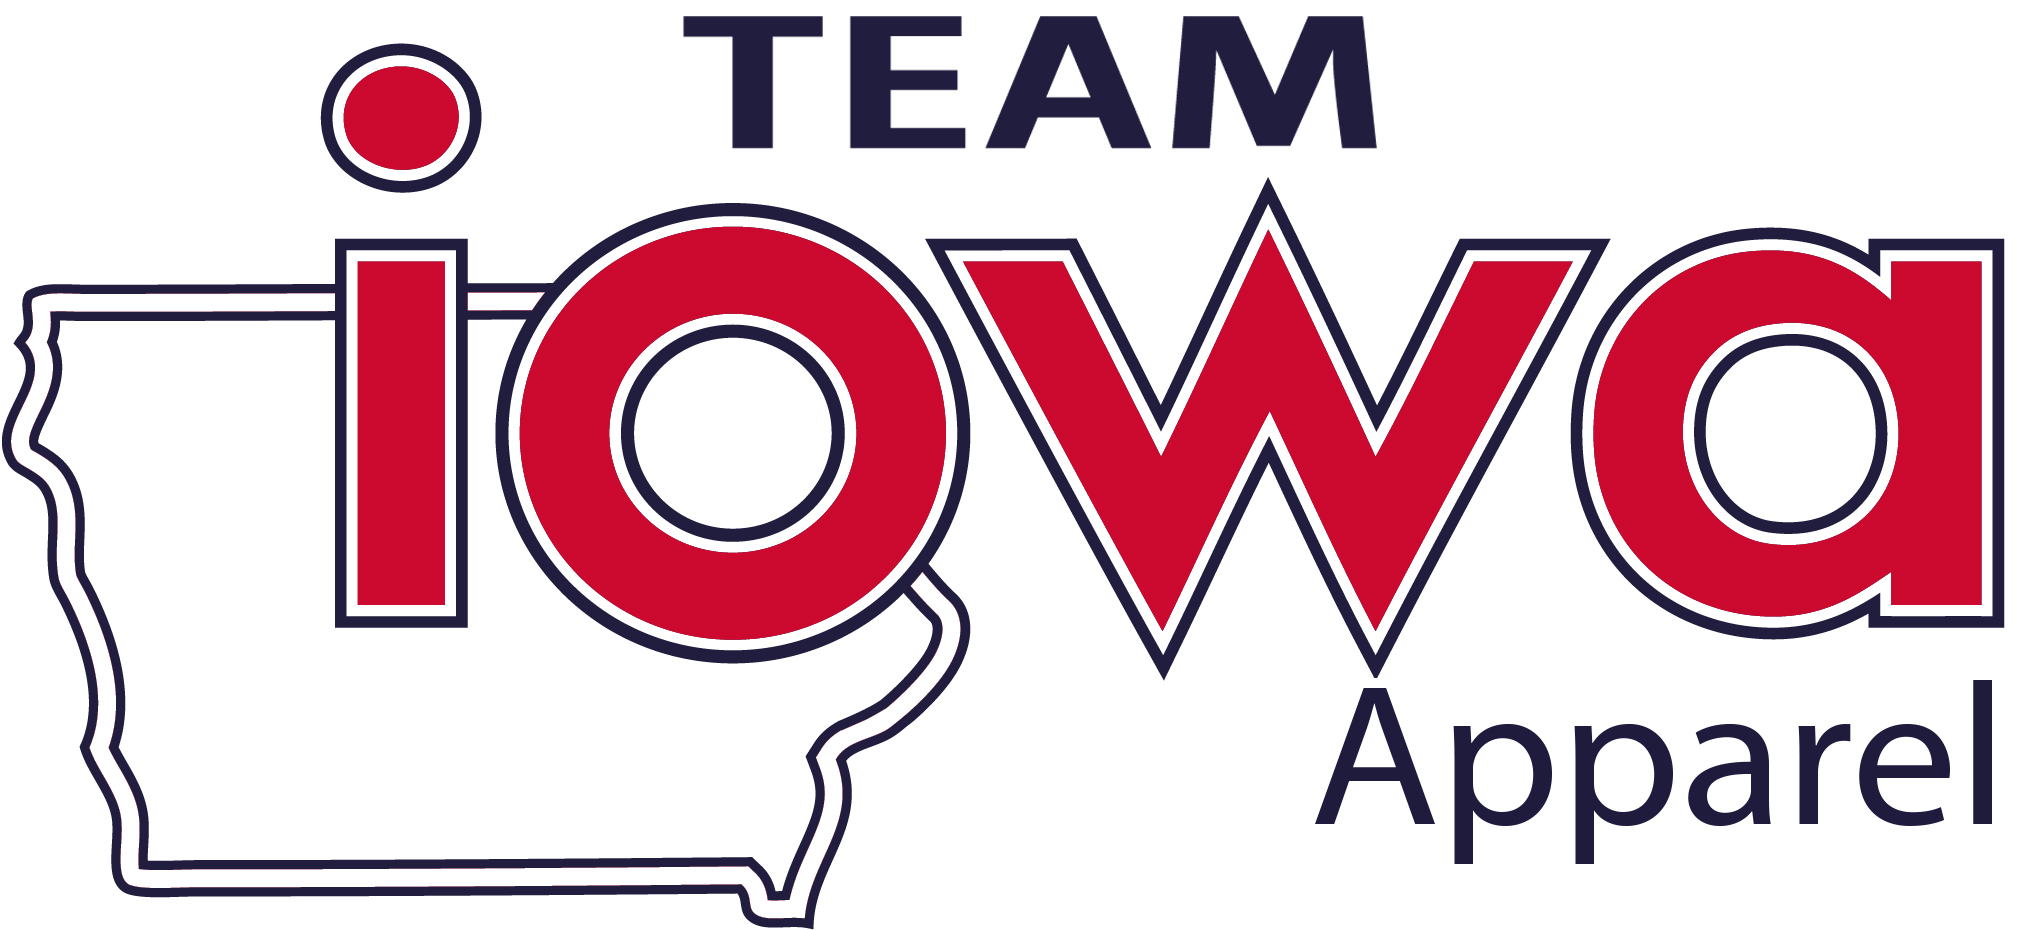 Team Iowa Athletics